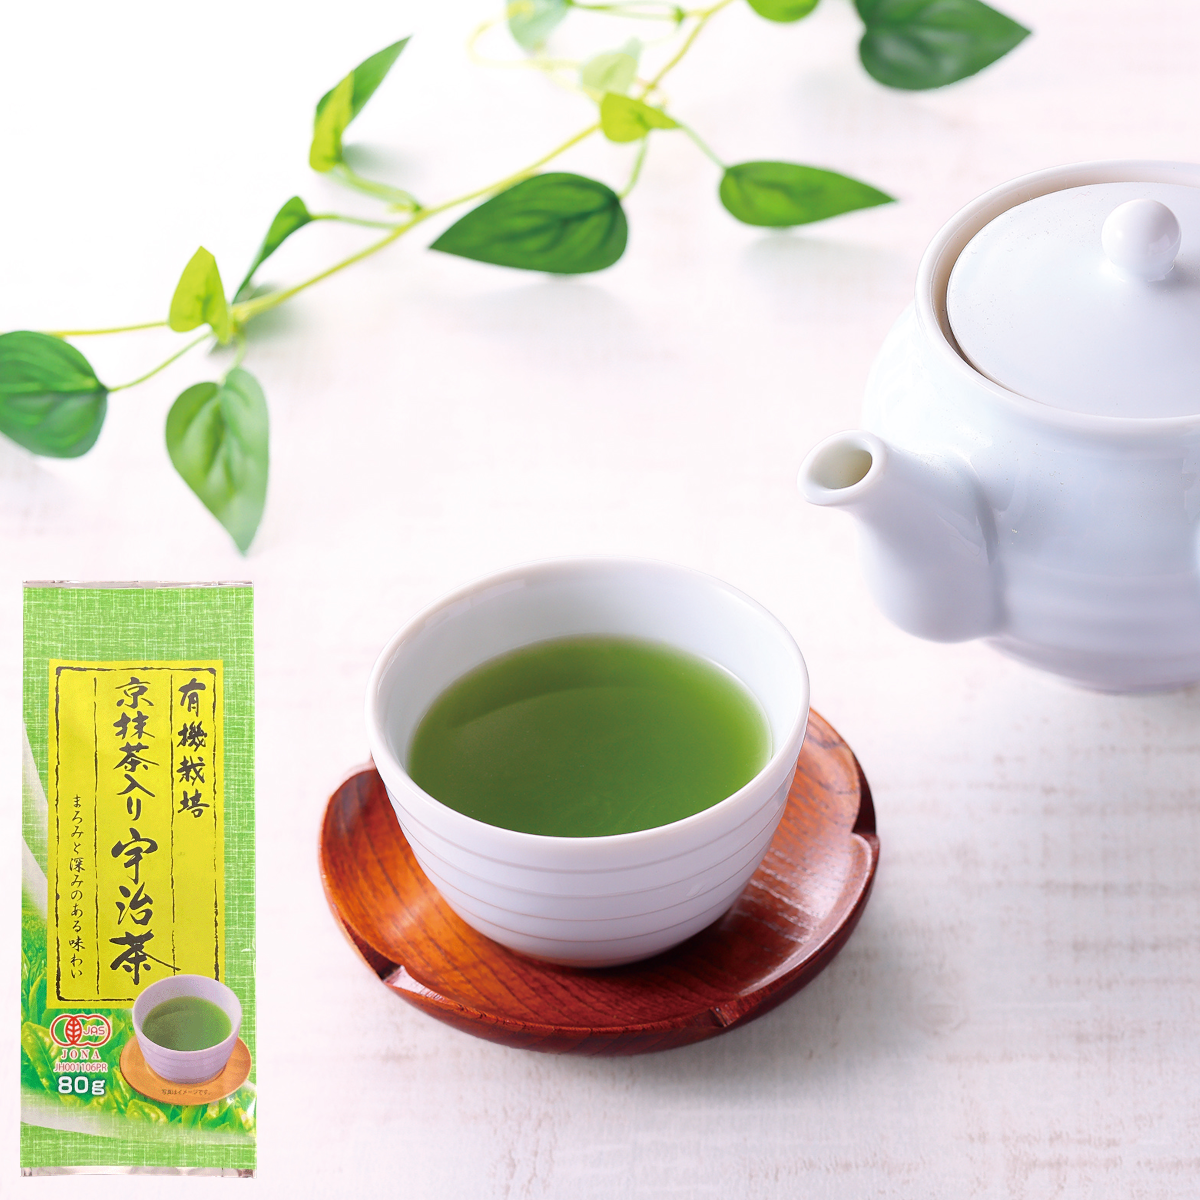 Organic Uji Sencha (Japanese green tea) with Matcha - 80g tea leaves